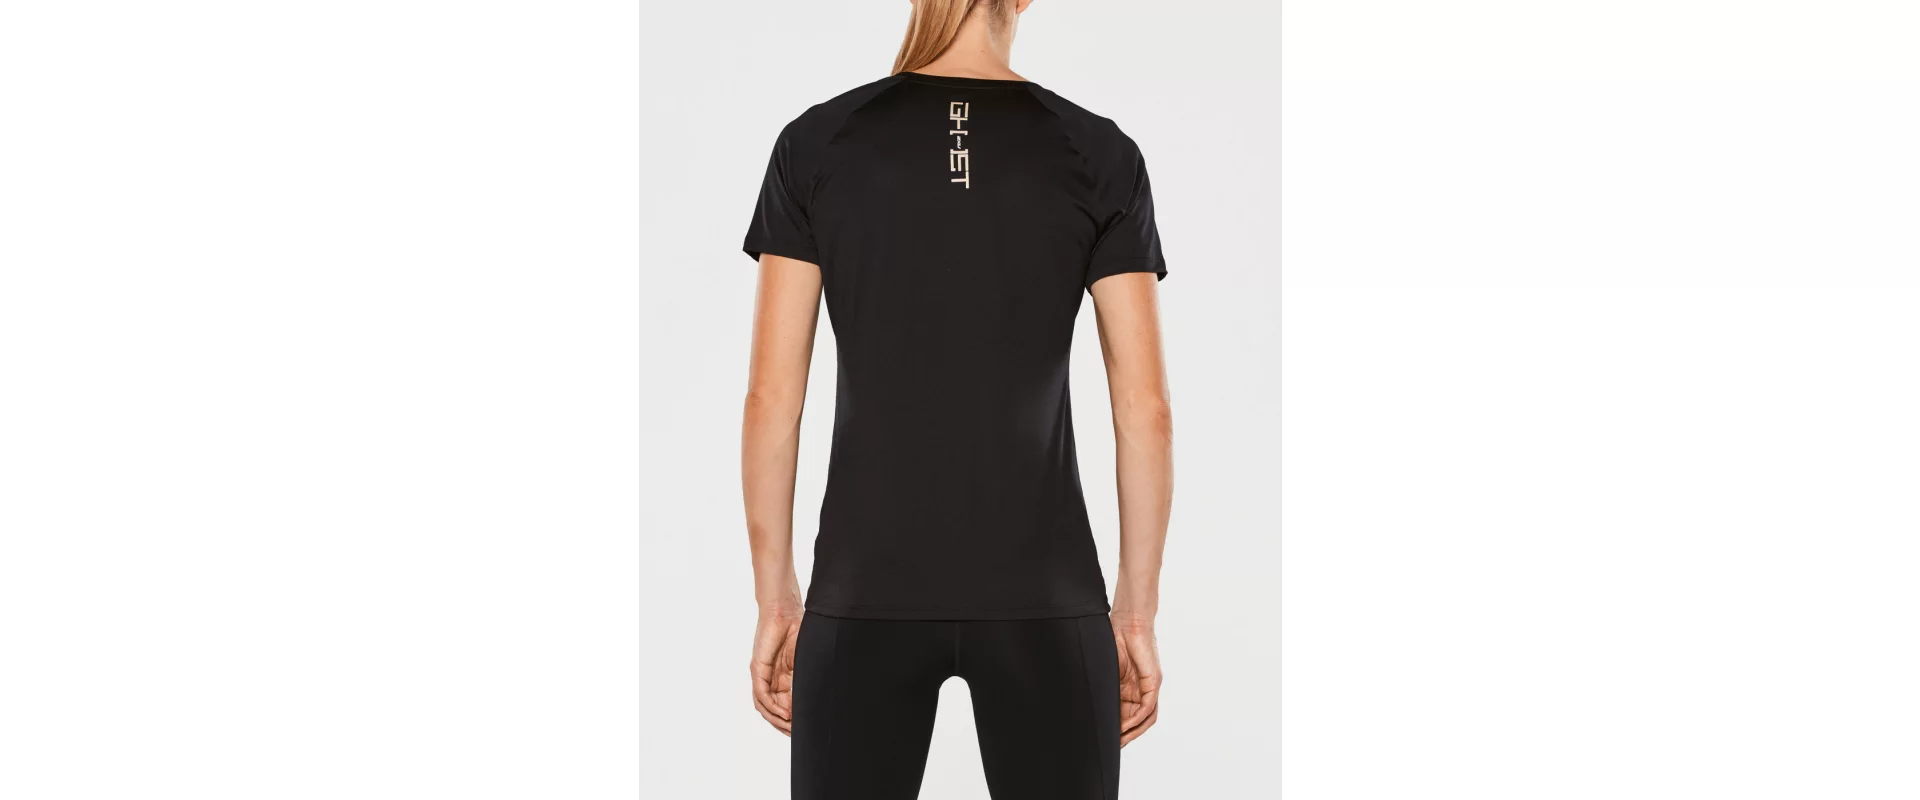 2XU GHST Short Sleeve Top W / Женская футболка для бега фото 1